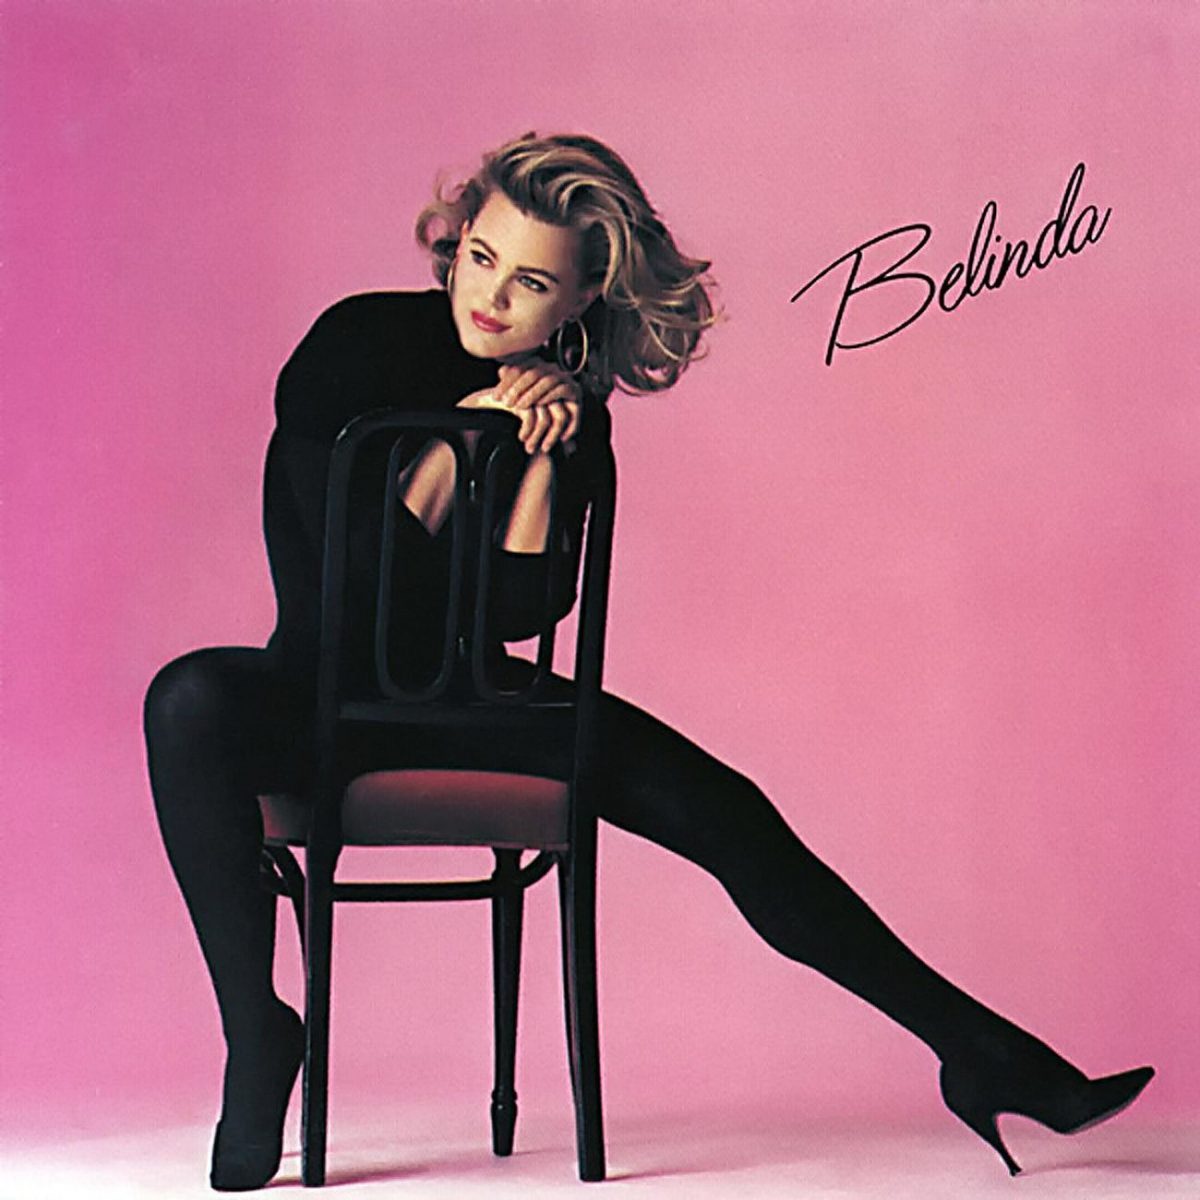 Belinda Carlisle Released Debut Solo Album "Belinda" 35 Years Ago Today Magazine